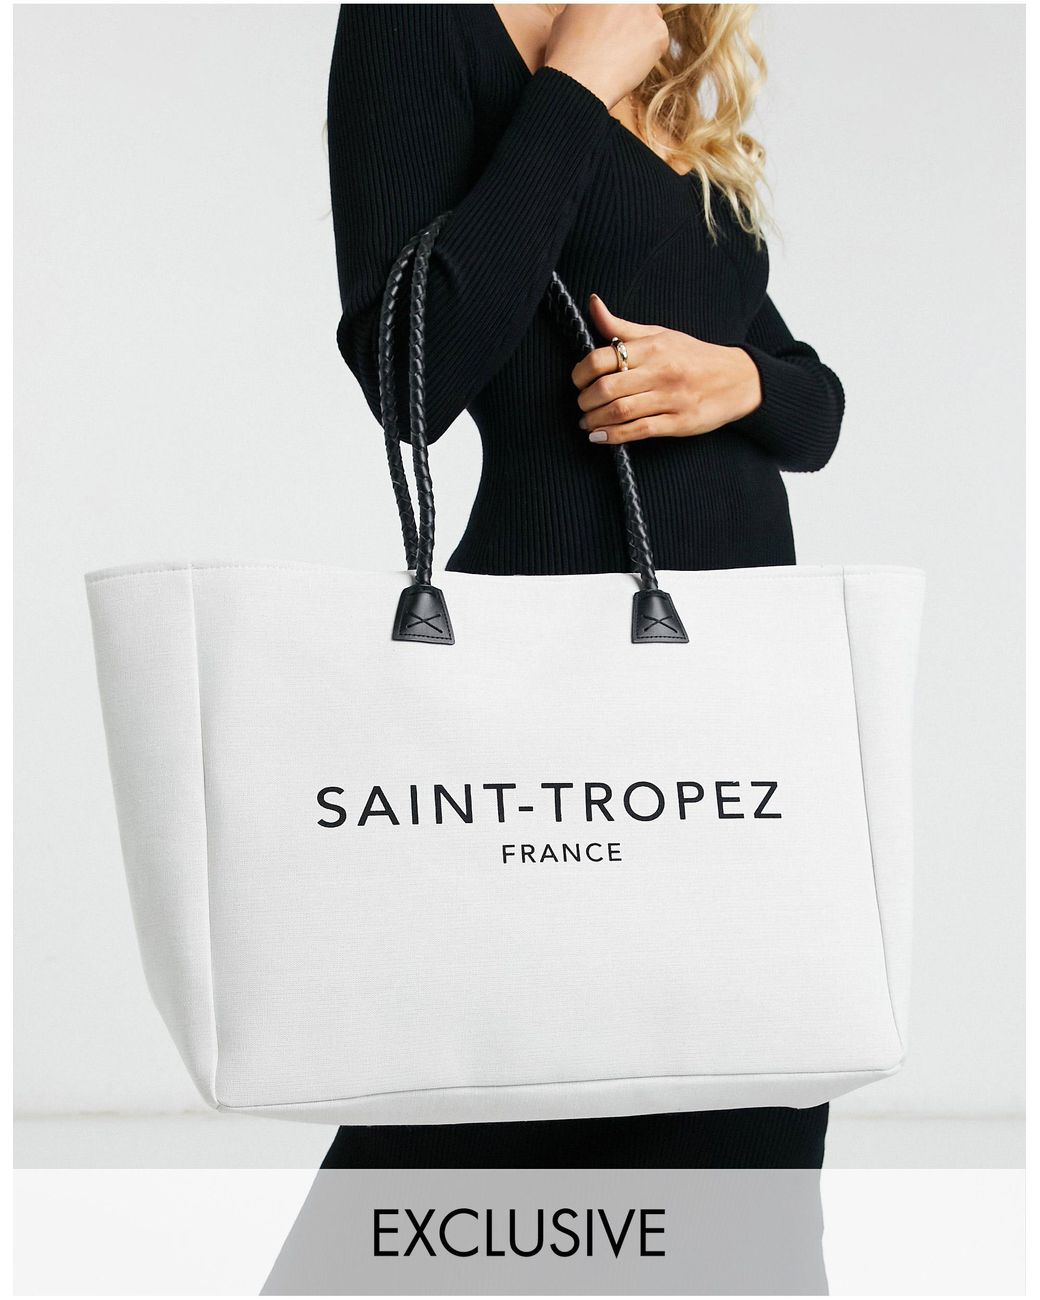 St Tropez Beach/Market Bag SMALL